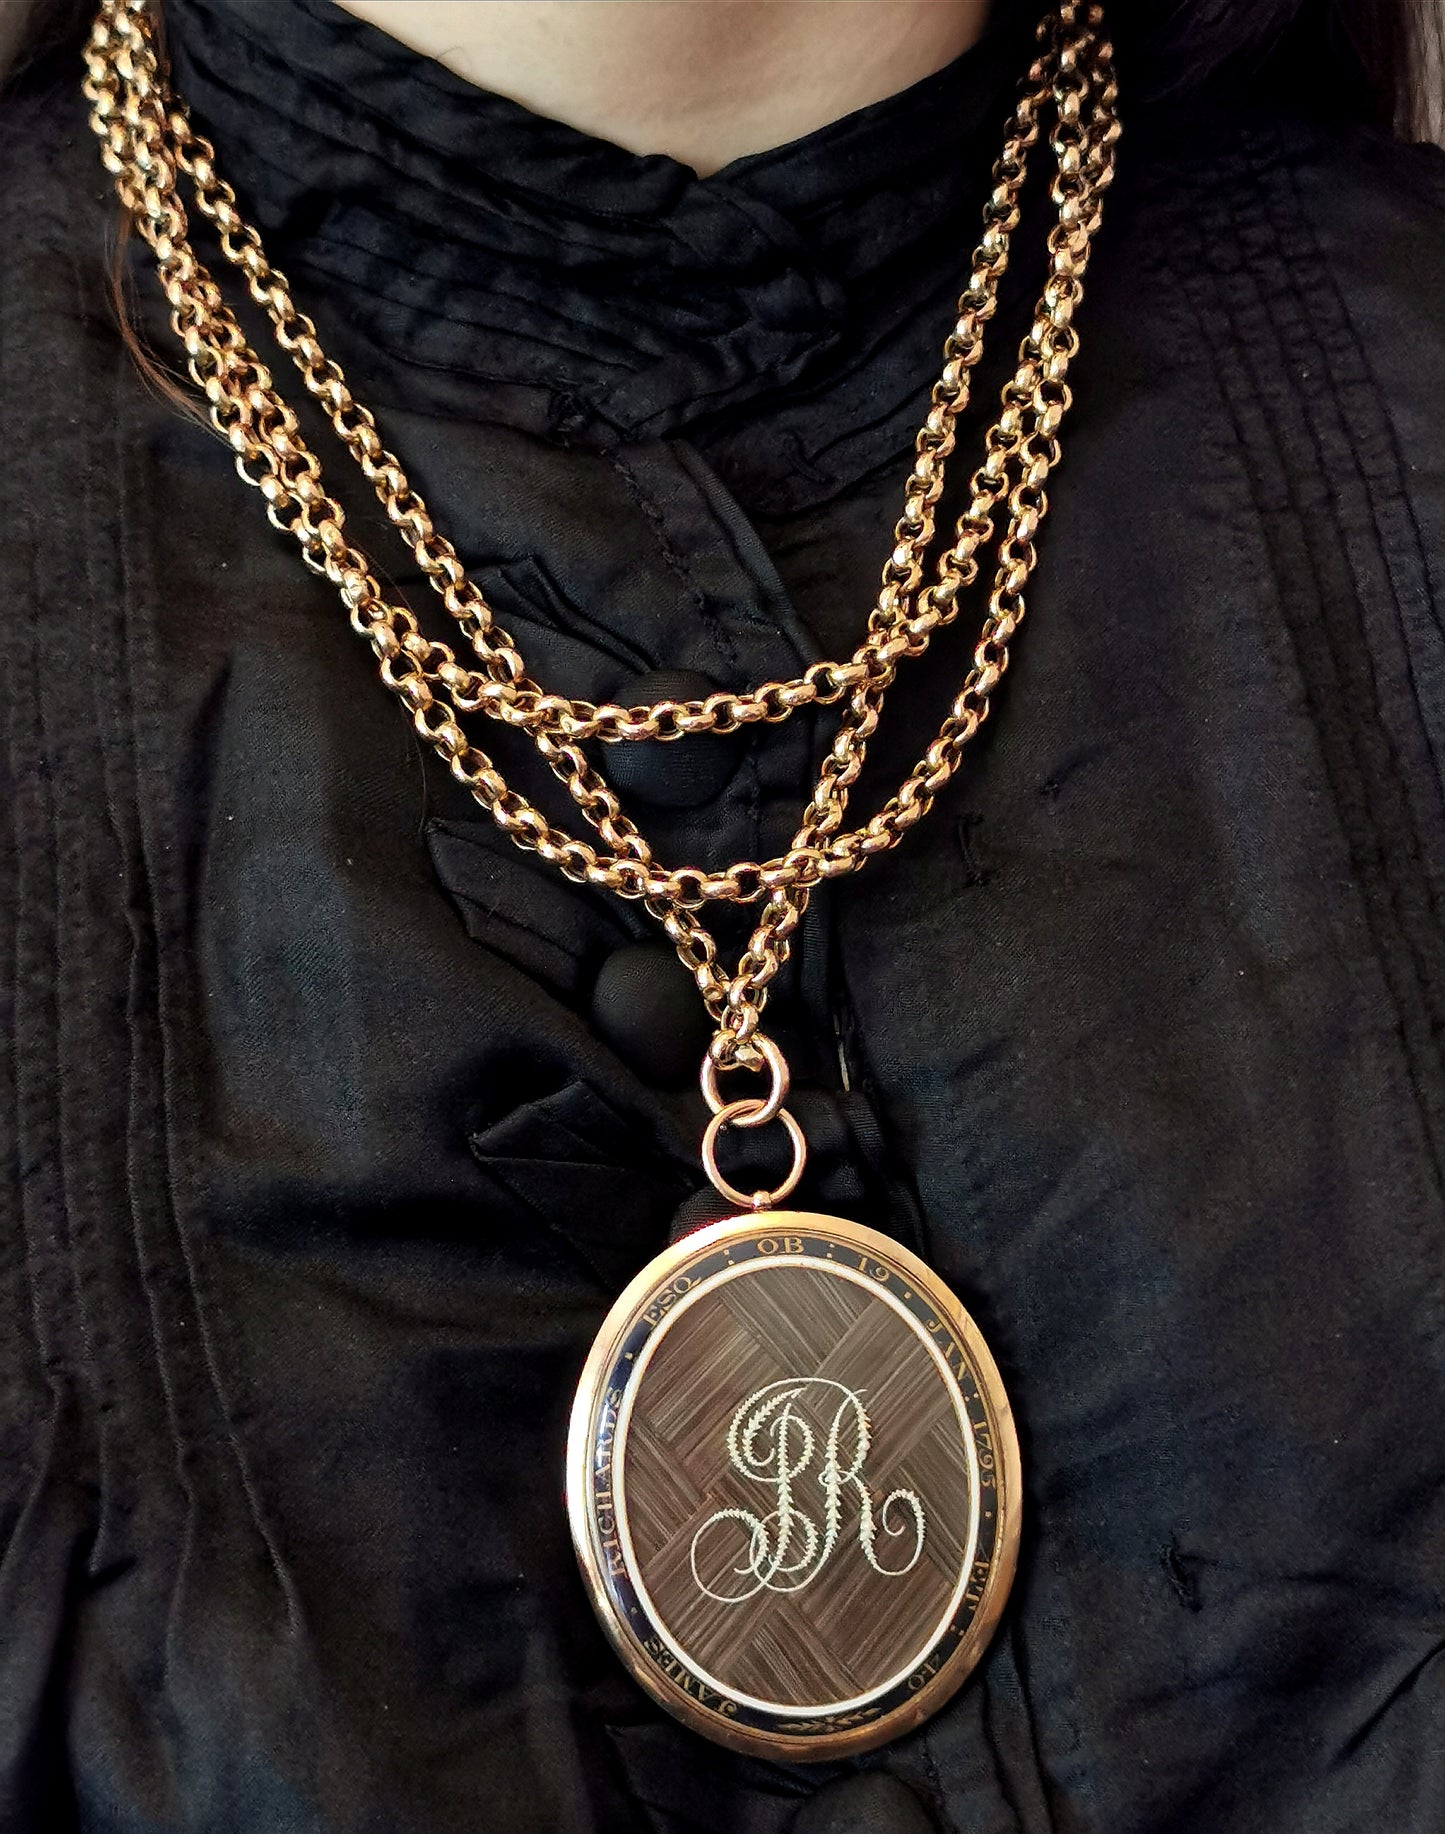 Antique 9ct gold longuard chain, Victorian necklace